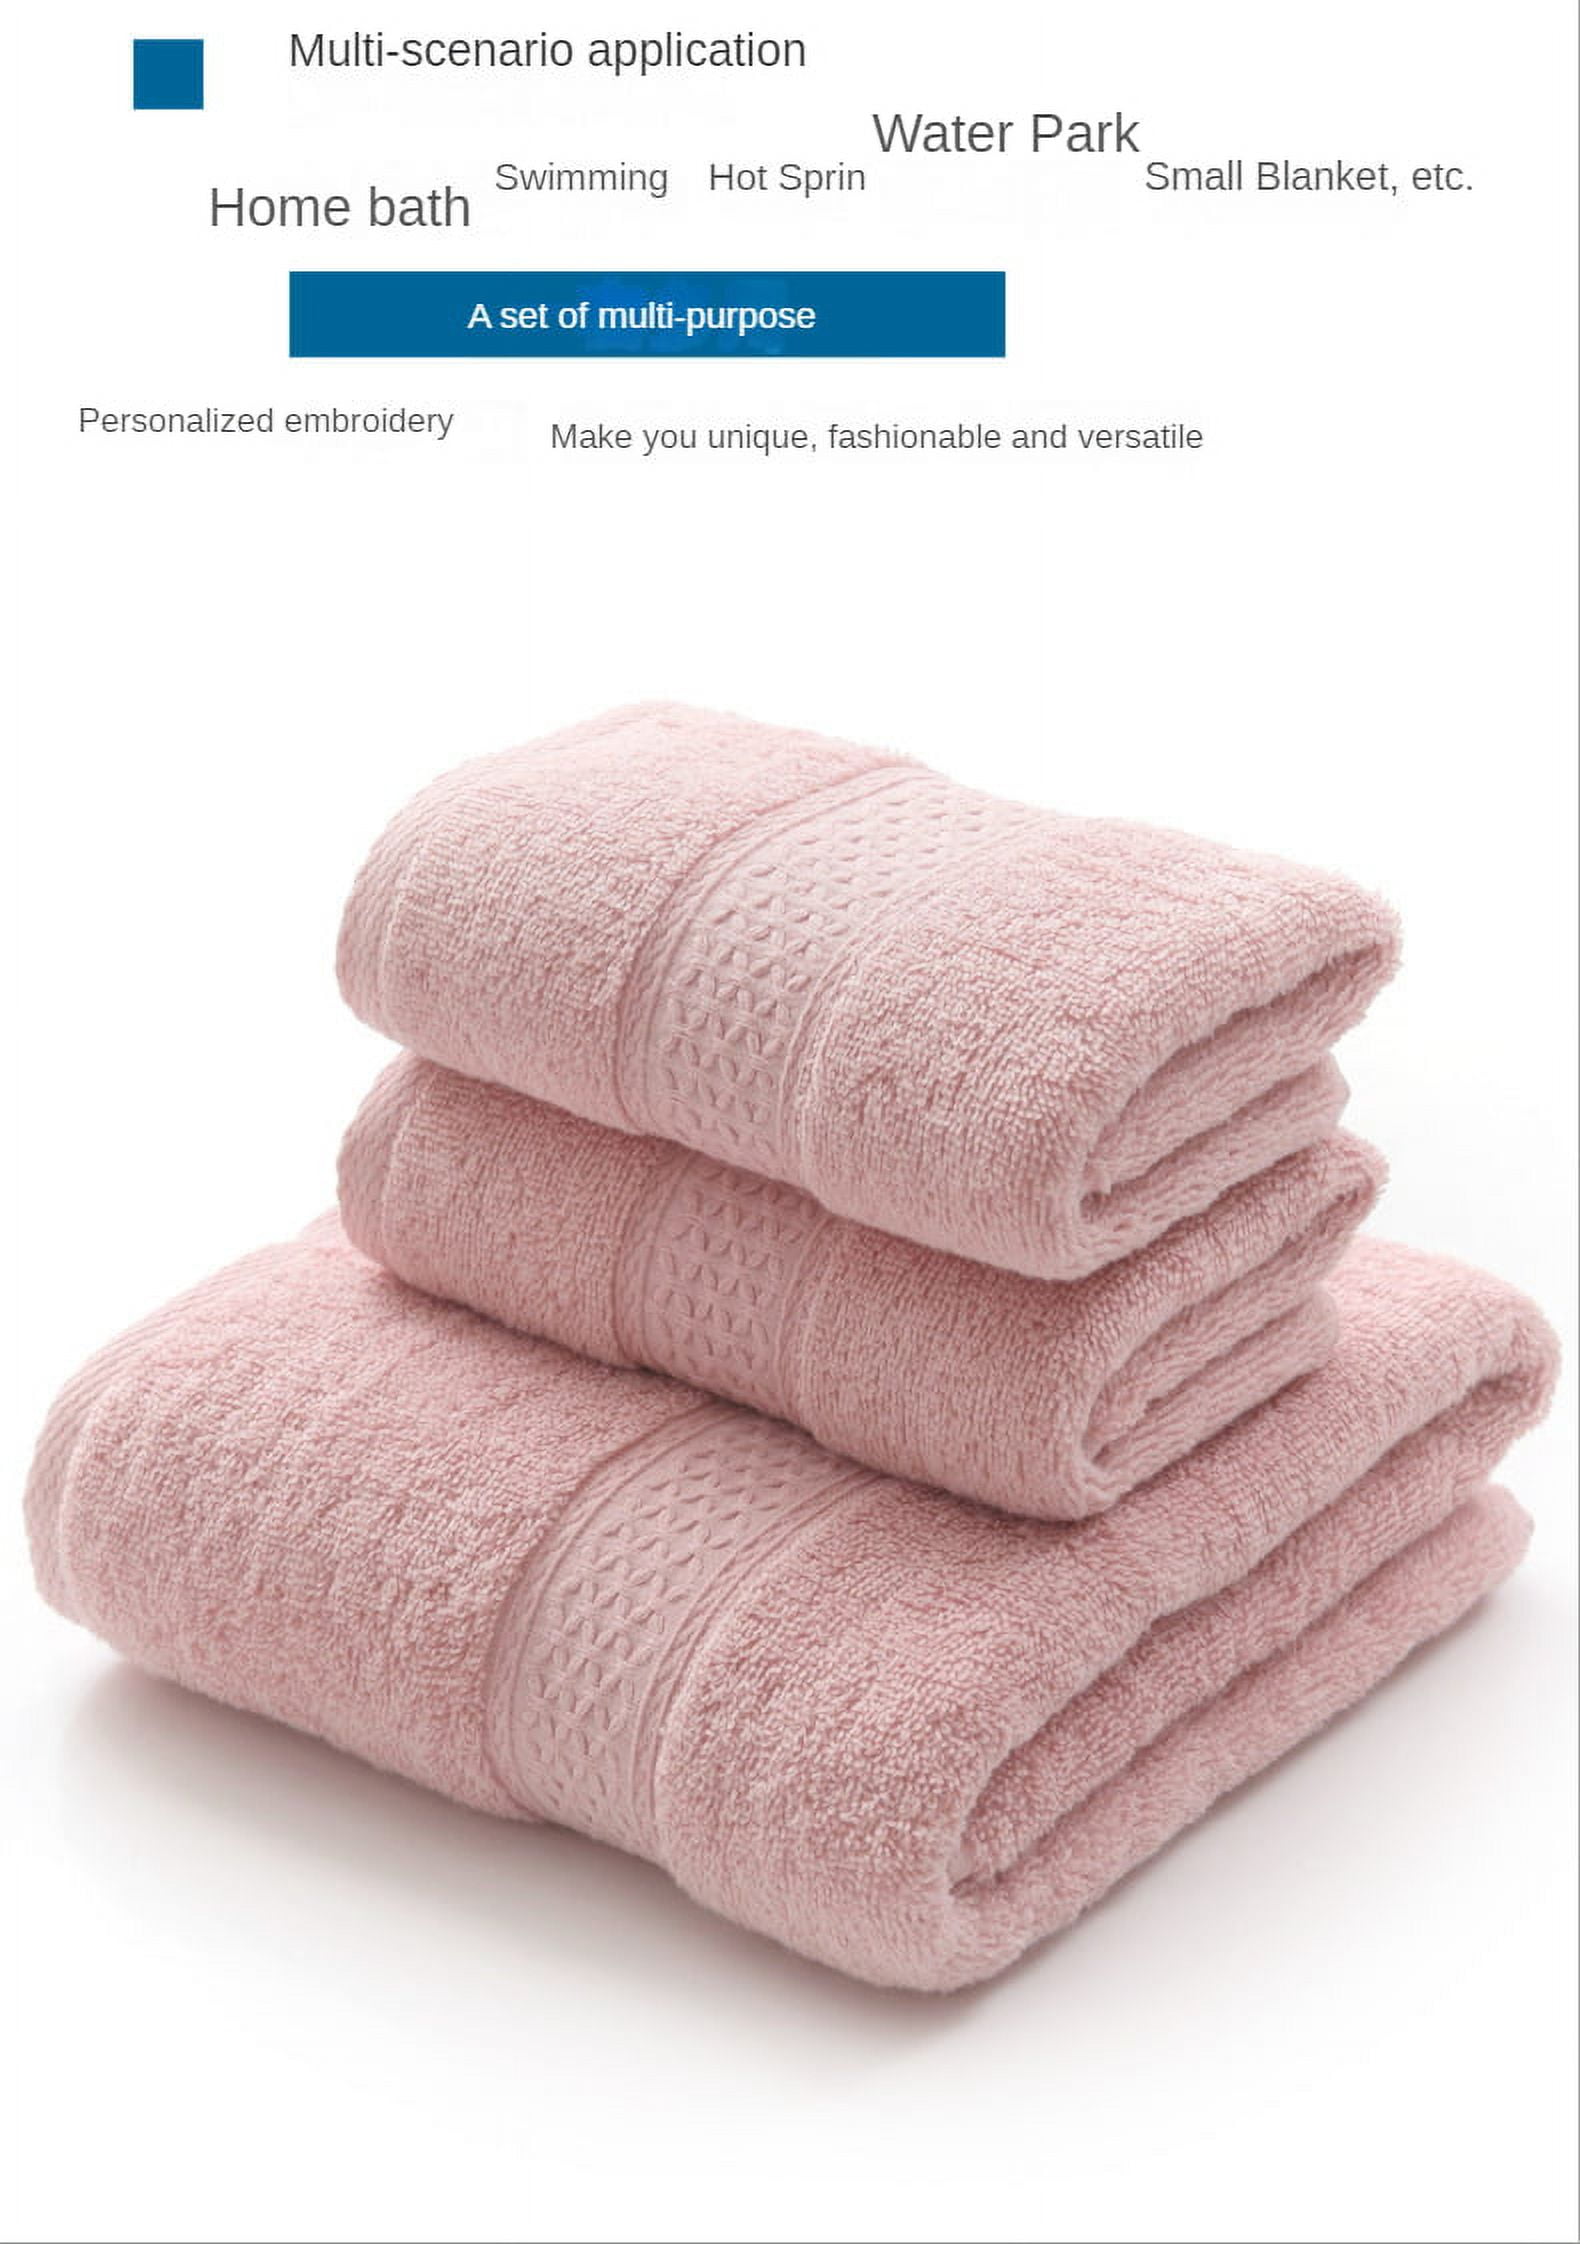 Chakir Turkish Linens Luxury Spa and Hotel Quality Premium Turkish Cotton 6-Piece Towel Set (2 x Bath Towels, 2 x Hand Towels, 2 x Washcloths, Pink)